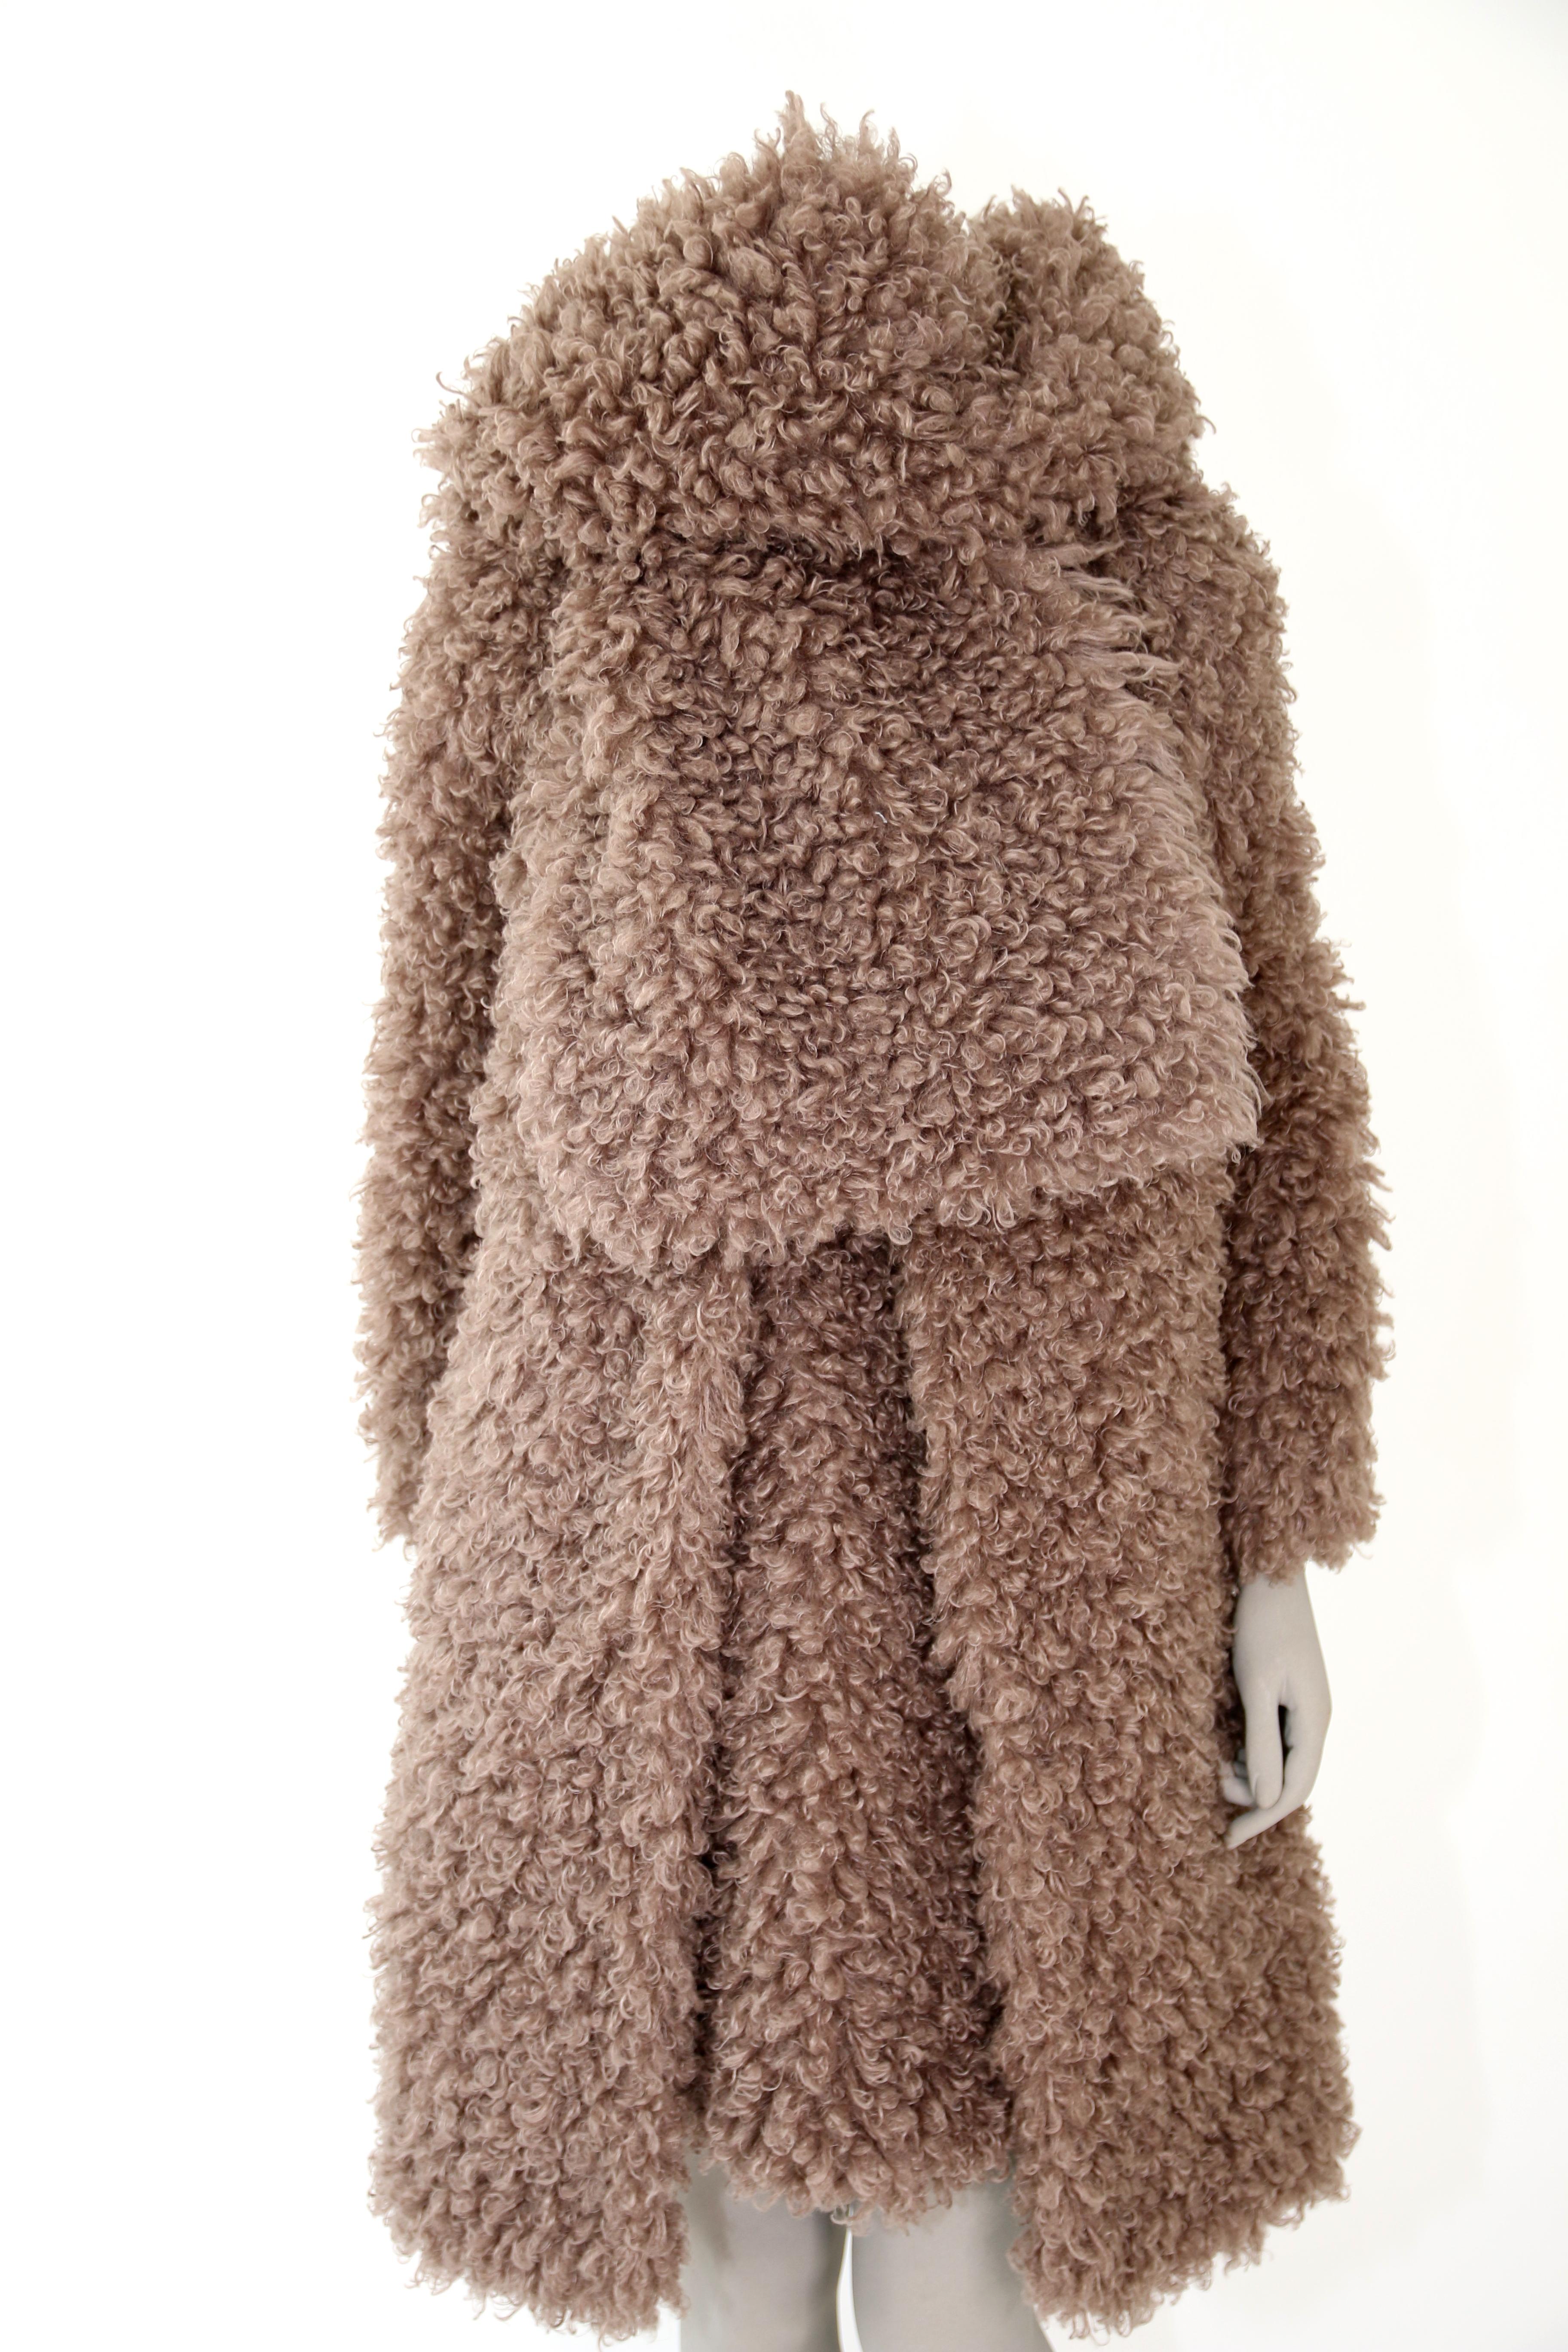 Pelush Faux Fur Curly Boucle' Poodle Coat - Small  For Sale 4